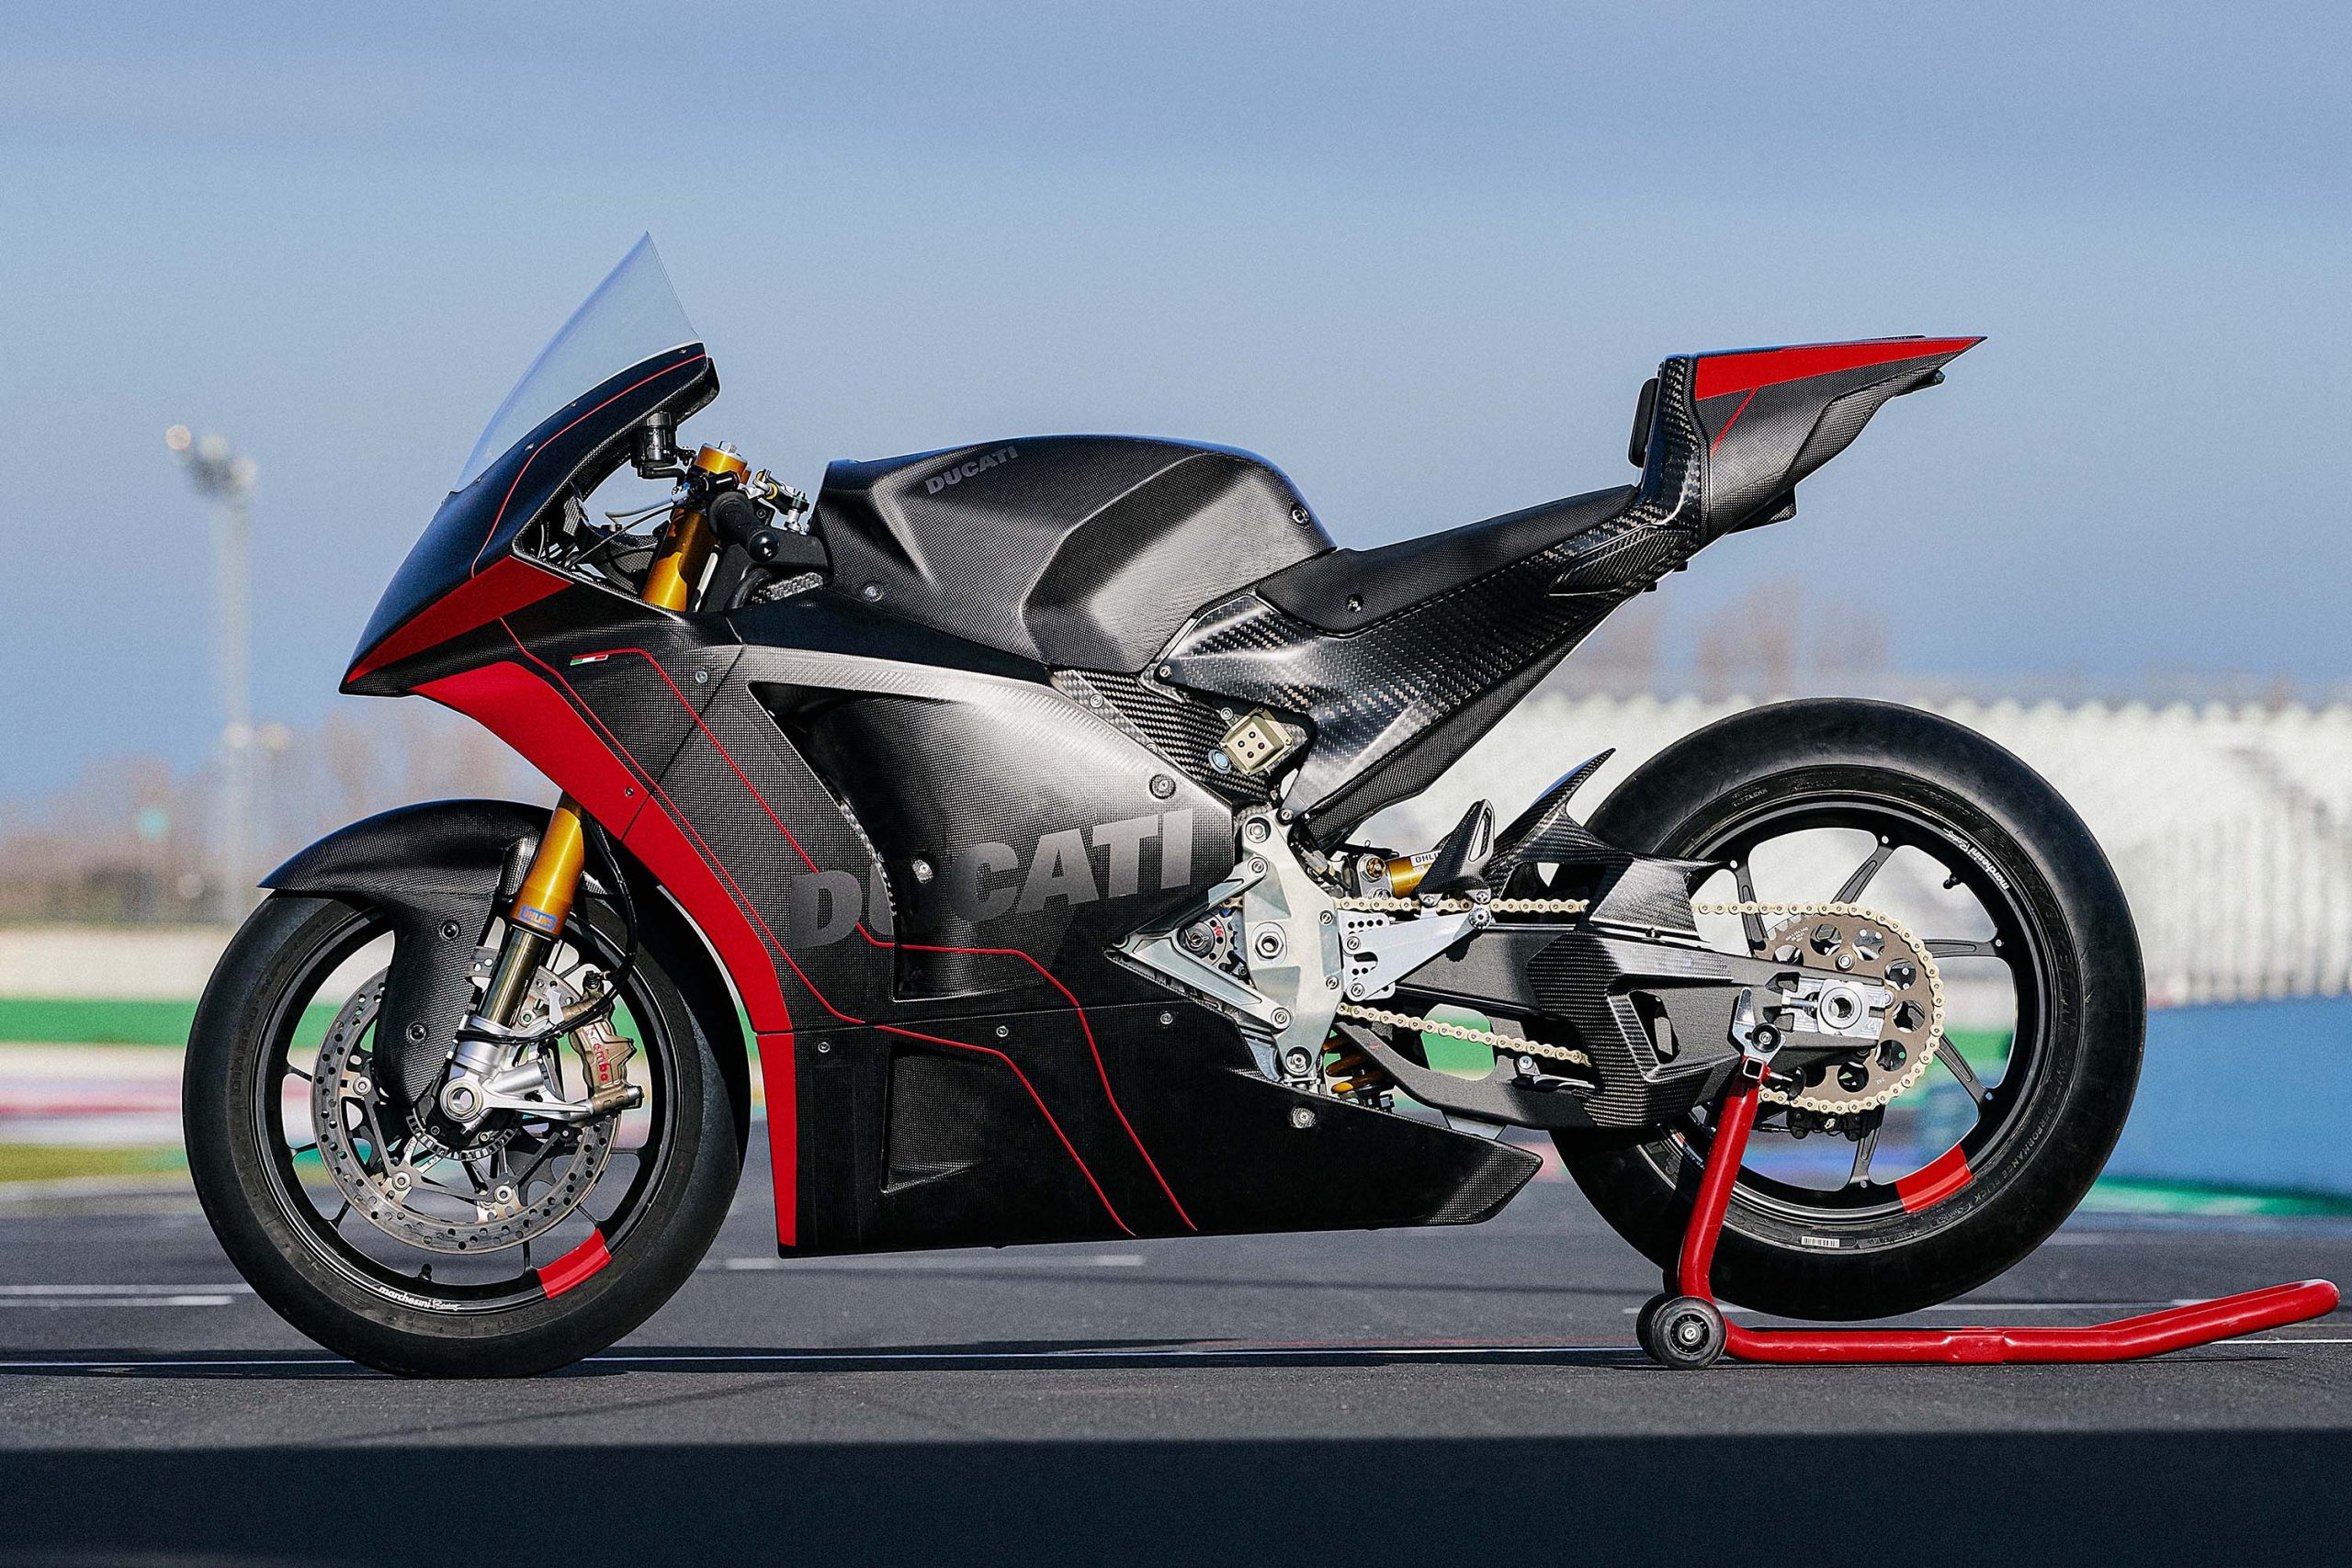 Ducati MotoE Electric Race Bike Revealed Testing on the Track